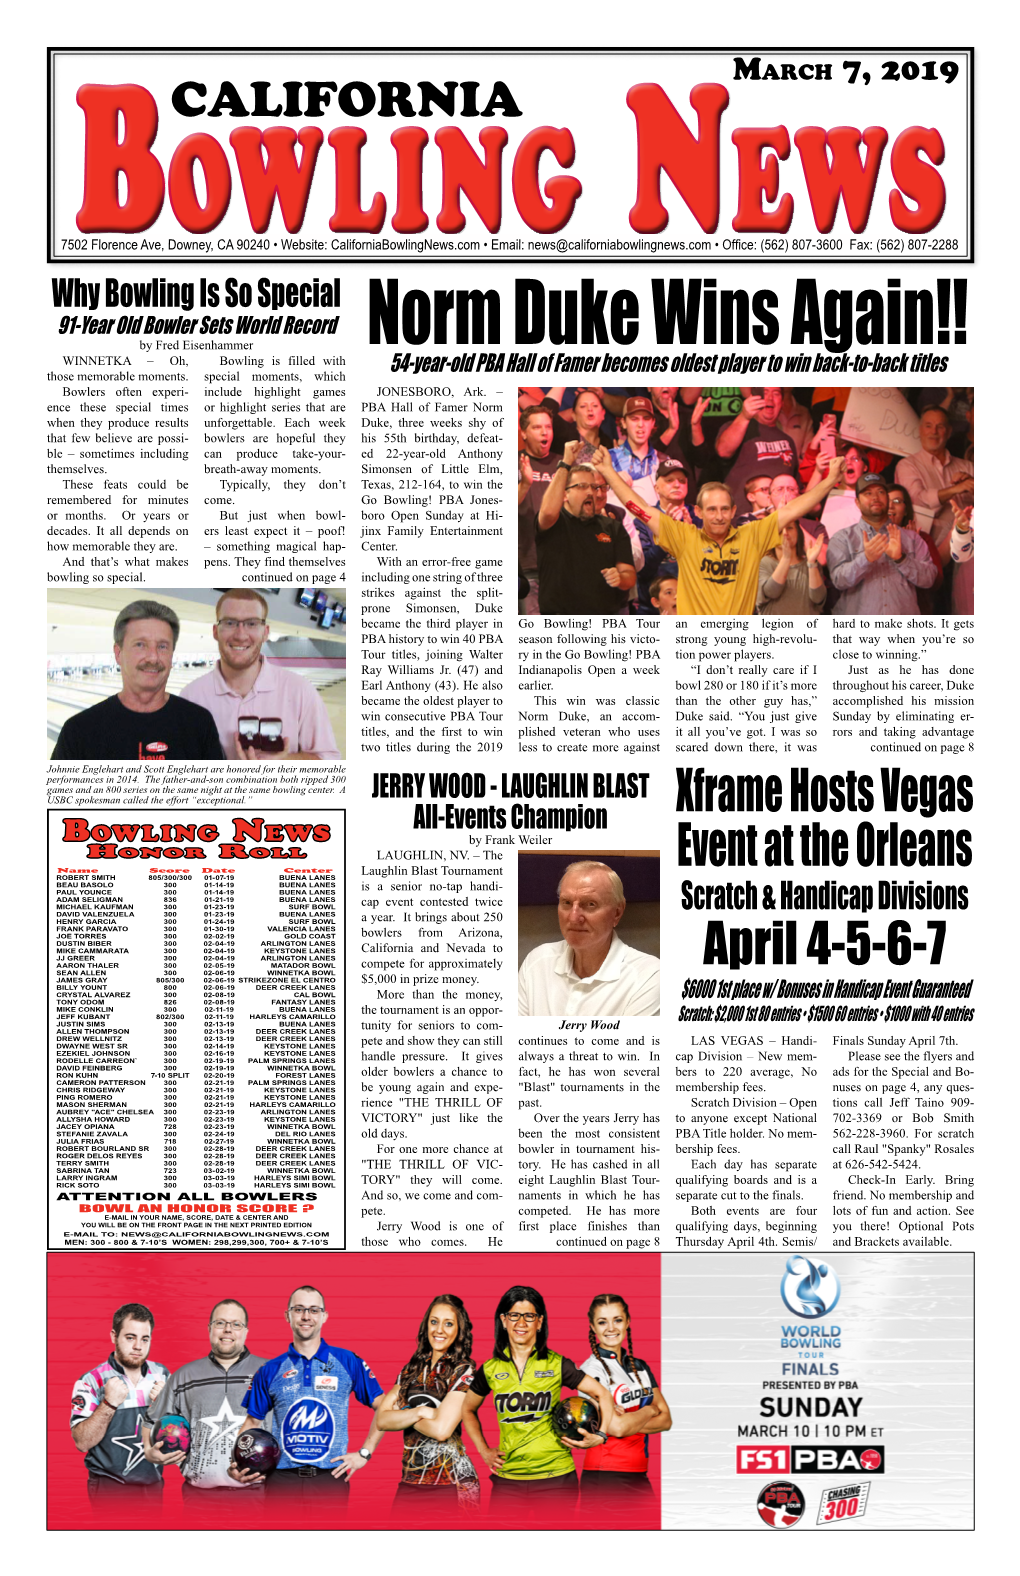 Norm Duke Wins Again!! Those Memorable Moments